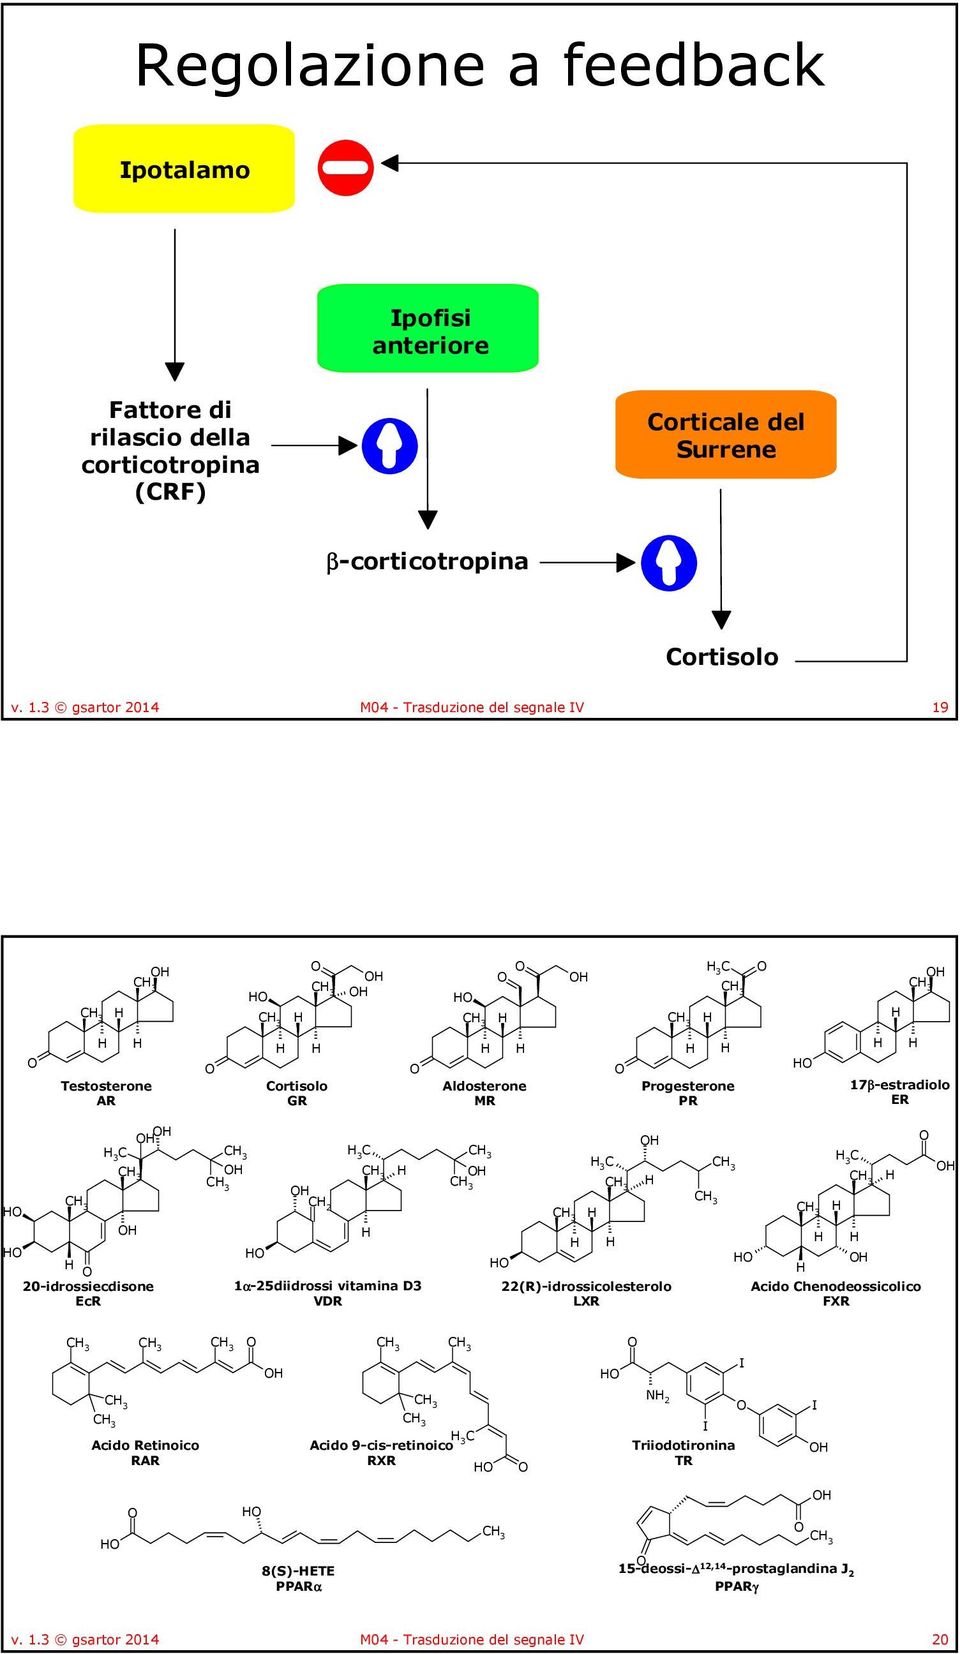 20-idrossiecdisone EcR C 2 C 3 1α-25diidrossi vitamina D3 VDR 3 C 22(R)-idrossicolesterolo LXR 3 C Acido Chenodeossicolico FXR I Acido Retinoico RAR